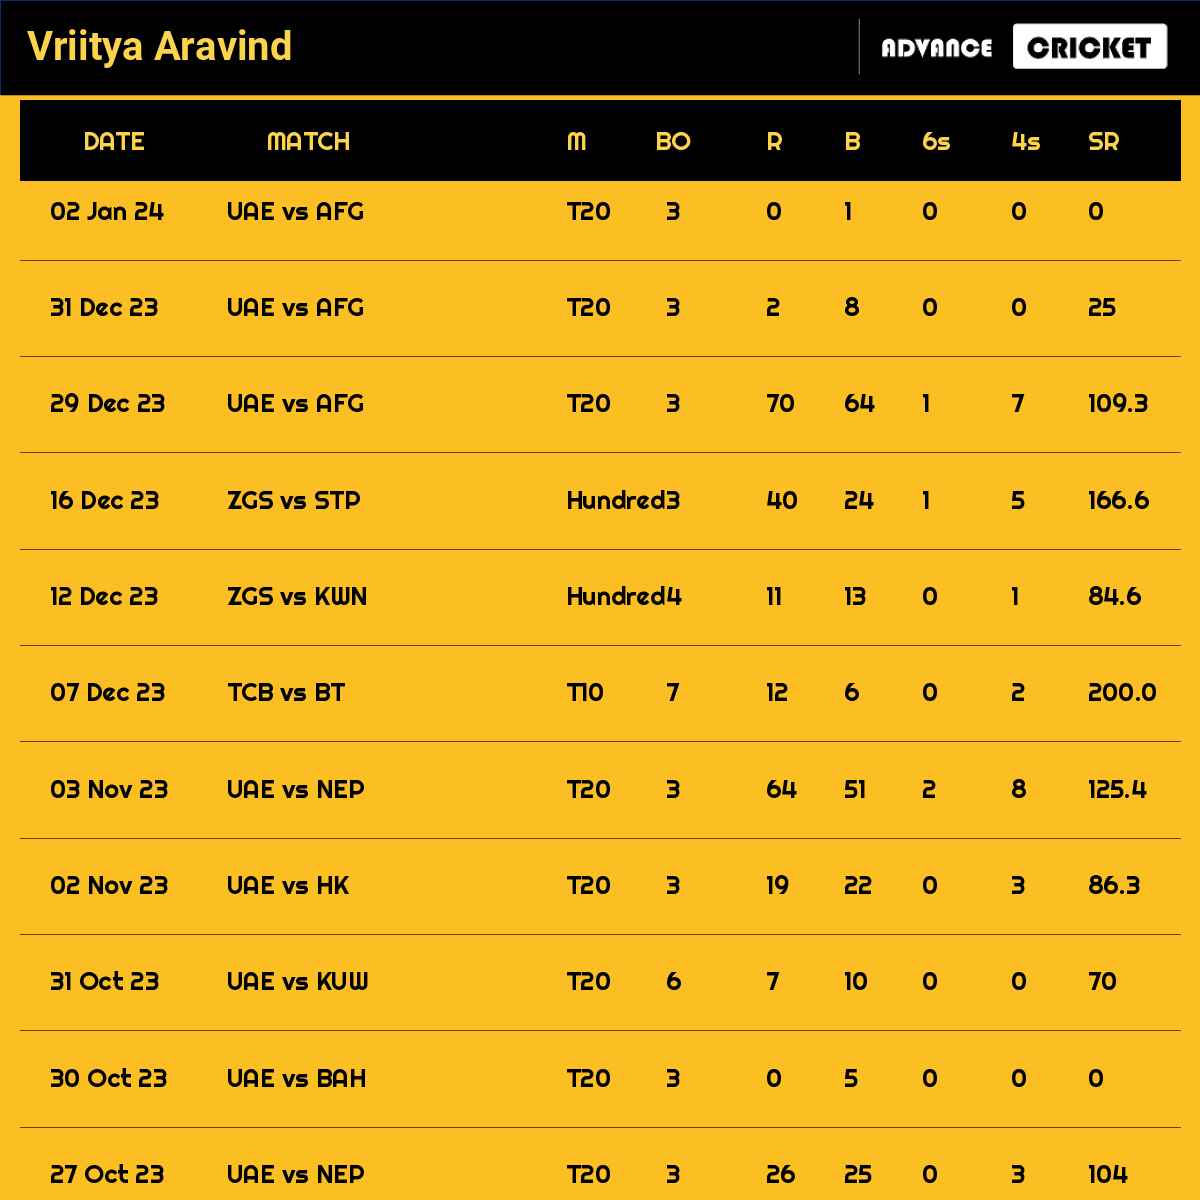 Vriitya Aravind recent matches